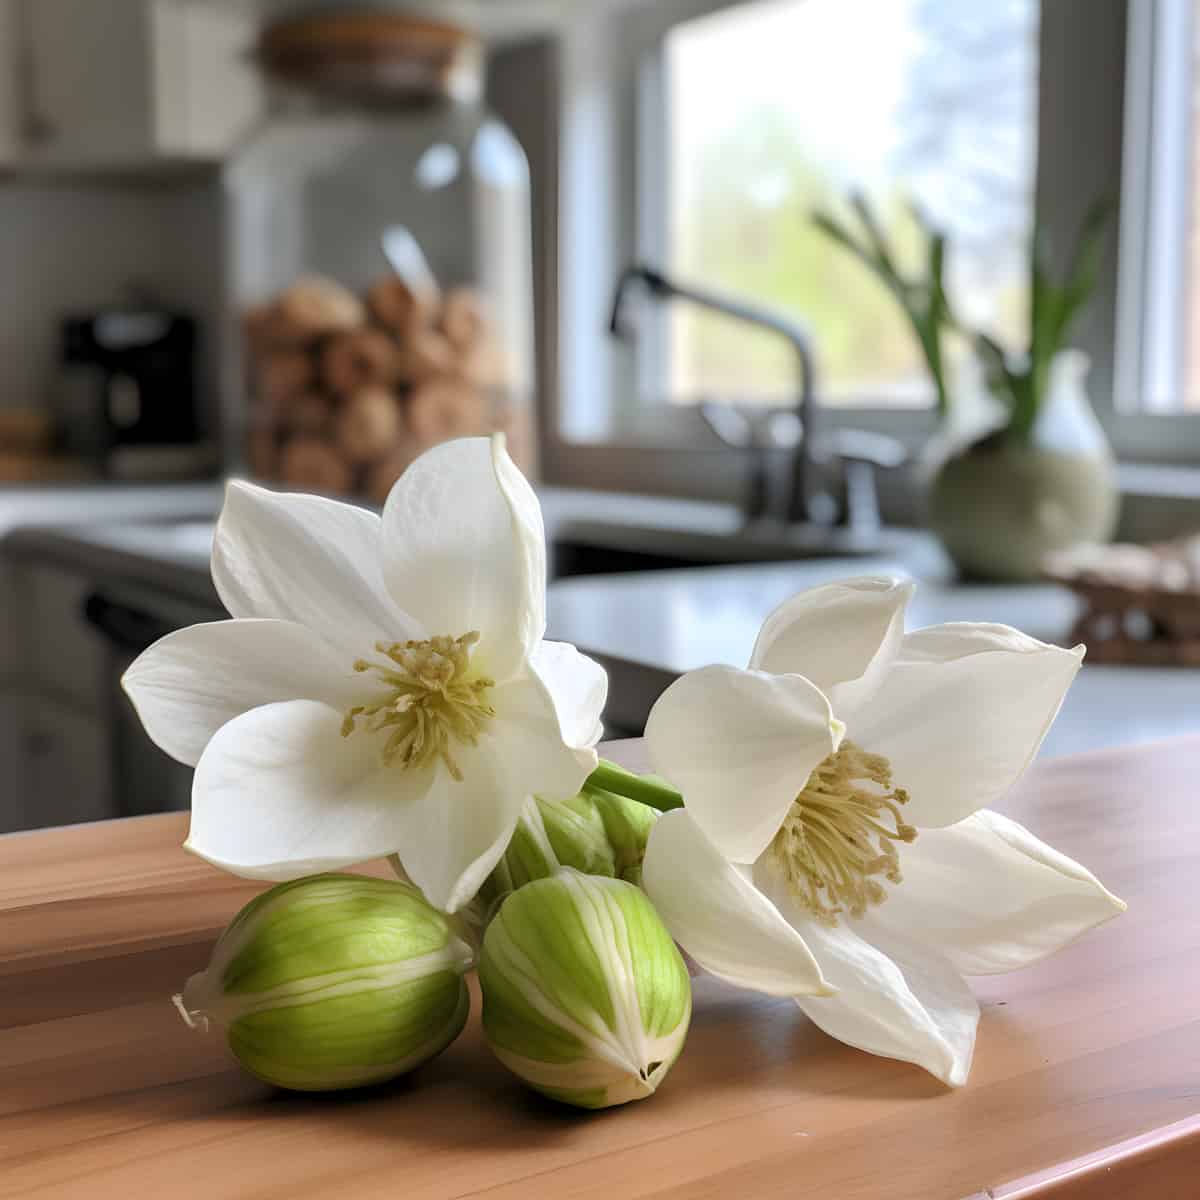 Mayapple Fruit on a kitchen counter